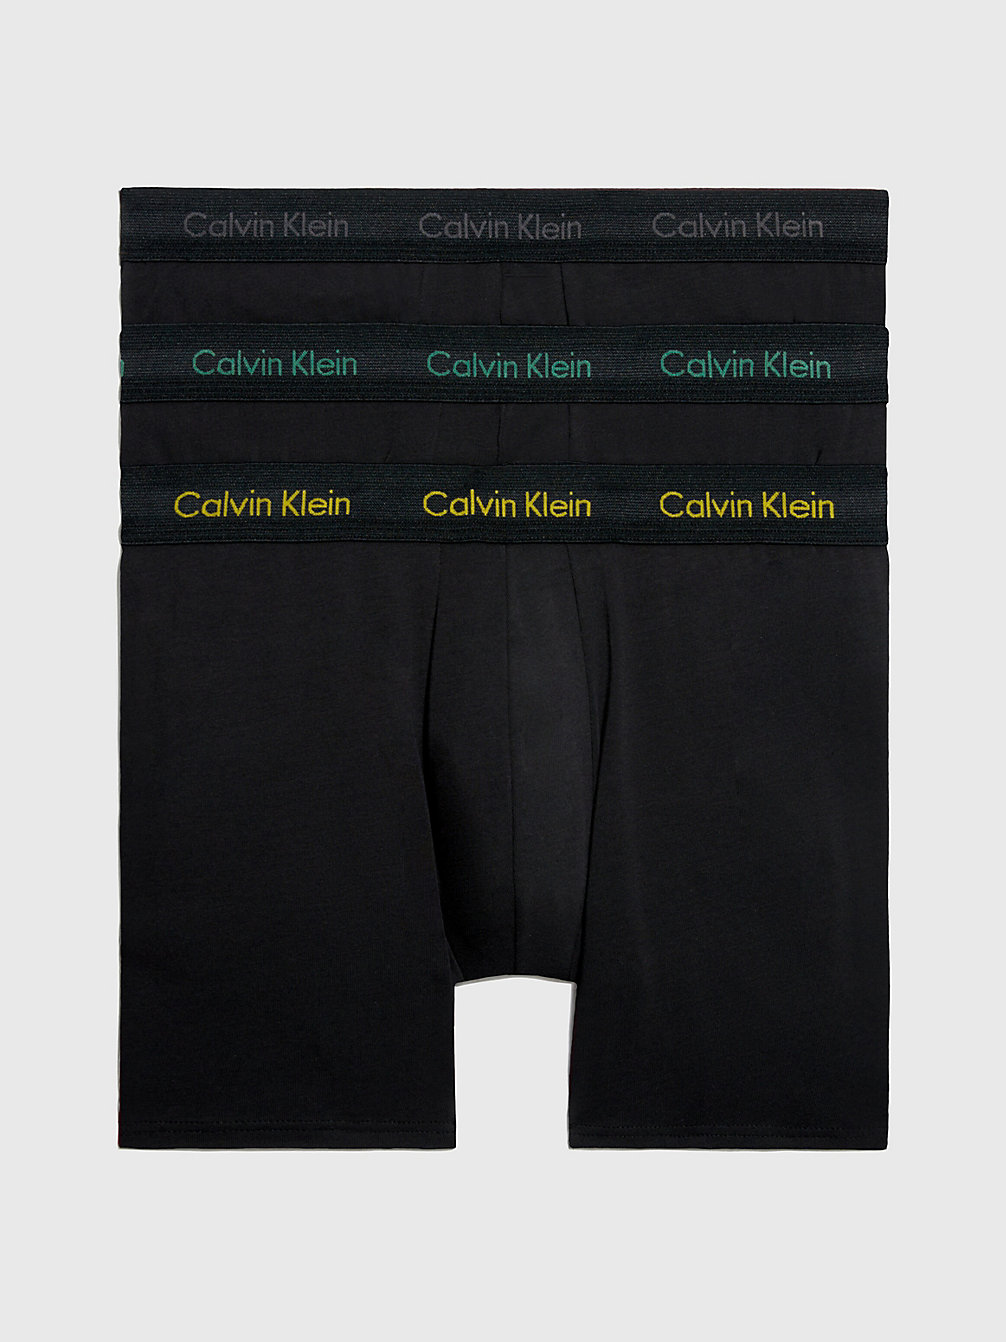 B-CHRCL HTHR, MRNGSD YW, FLG GRN LG Lot De 3 Boxers - Cotton Stretch undefined hommes Calvin Klein